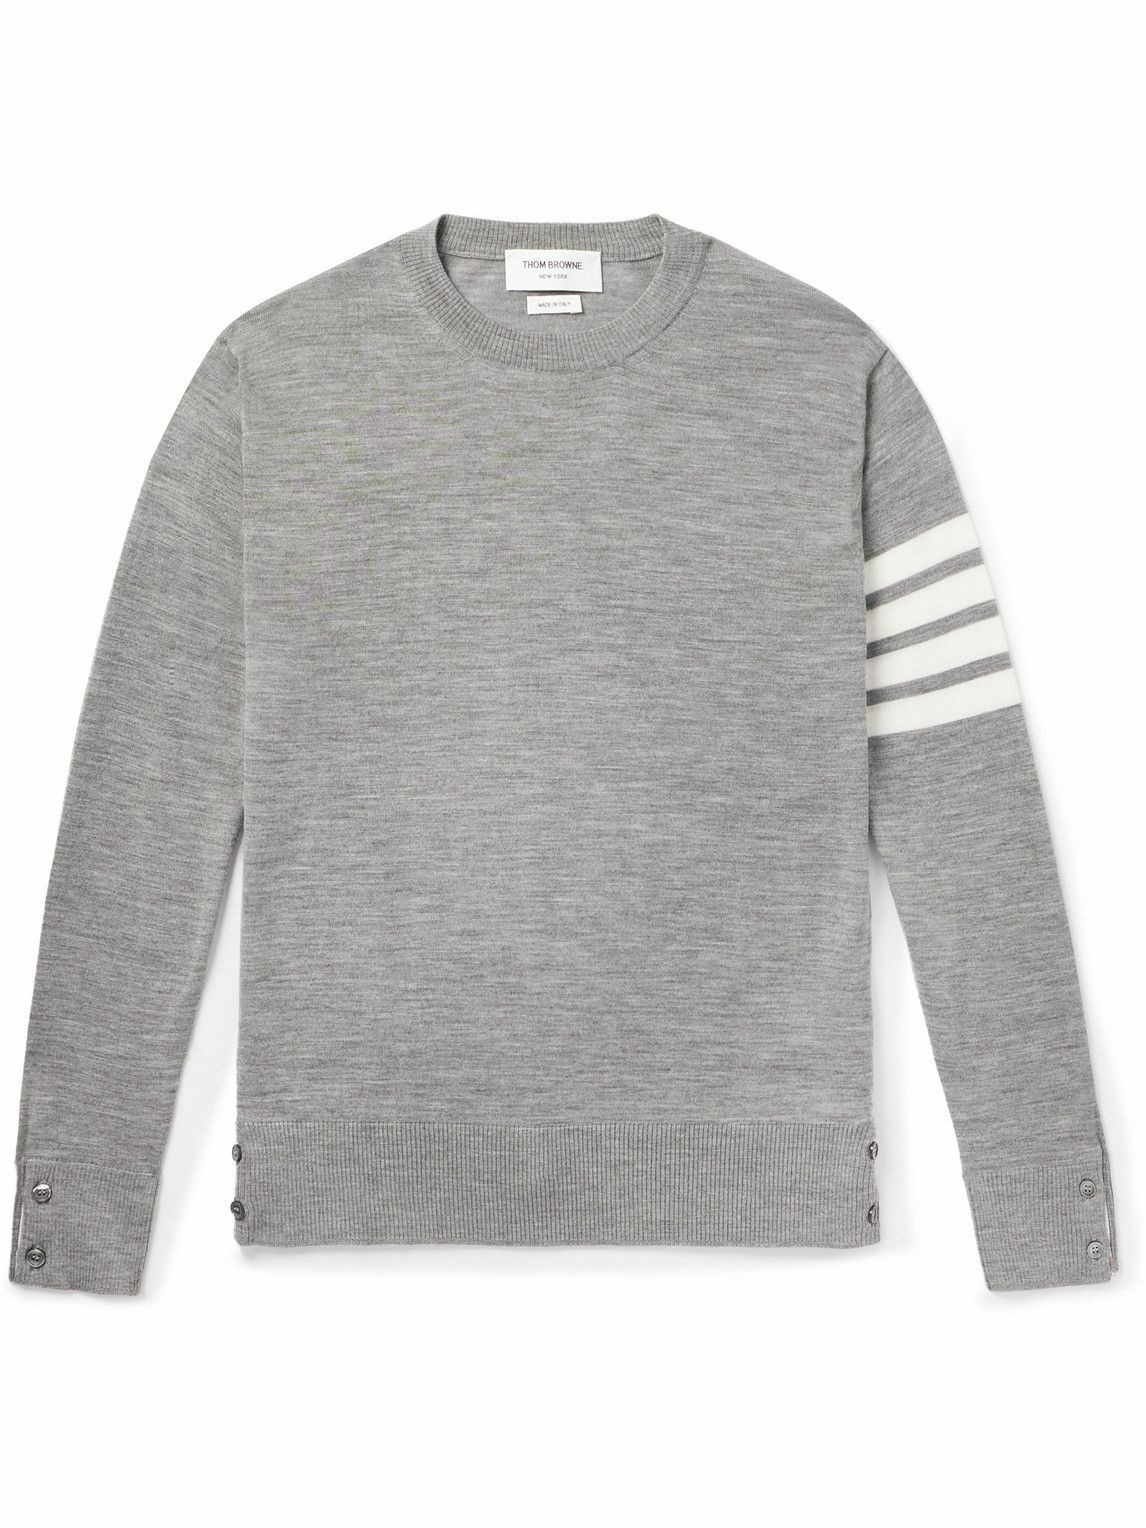 Thom Browne - Slim-Fit Striped Merino Wool Sweater - Gray Thom Browne